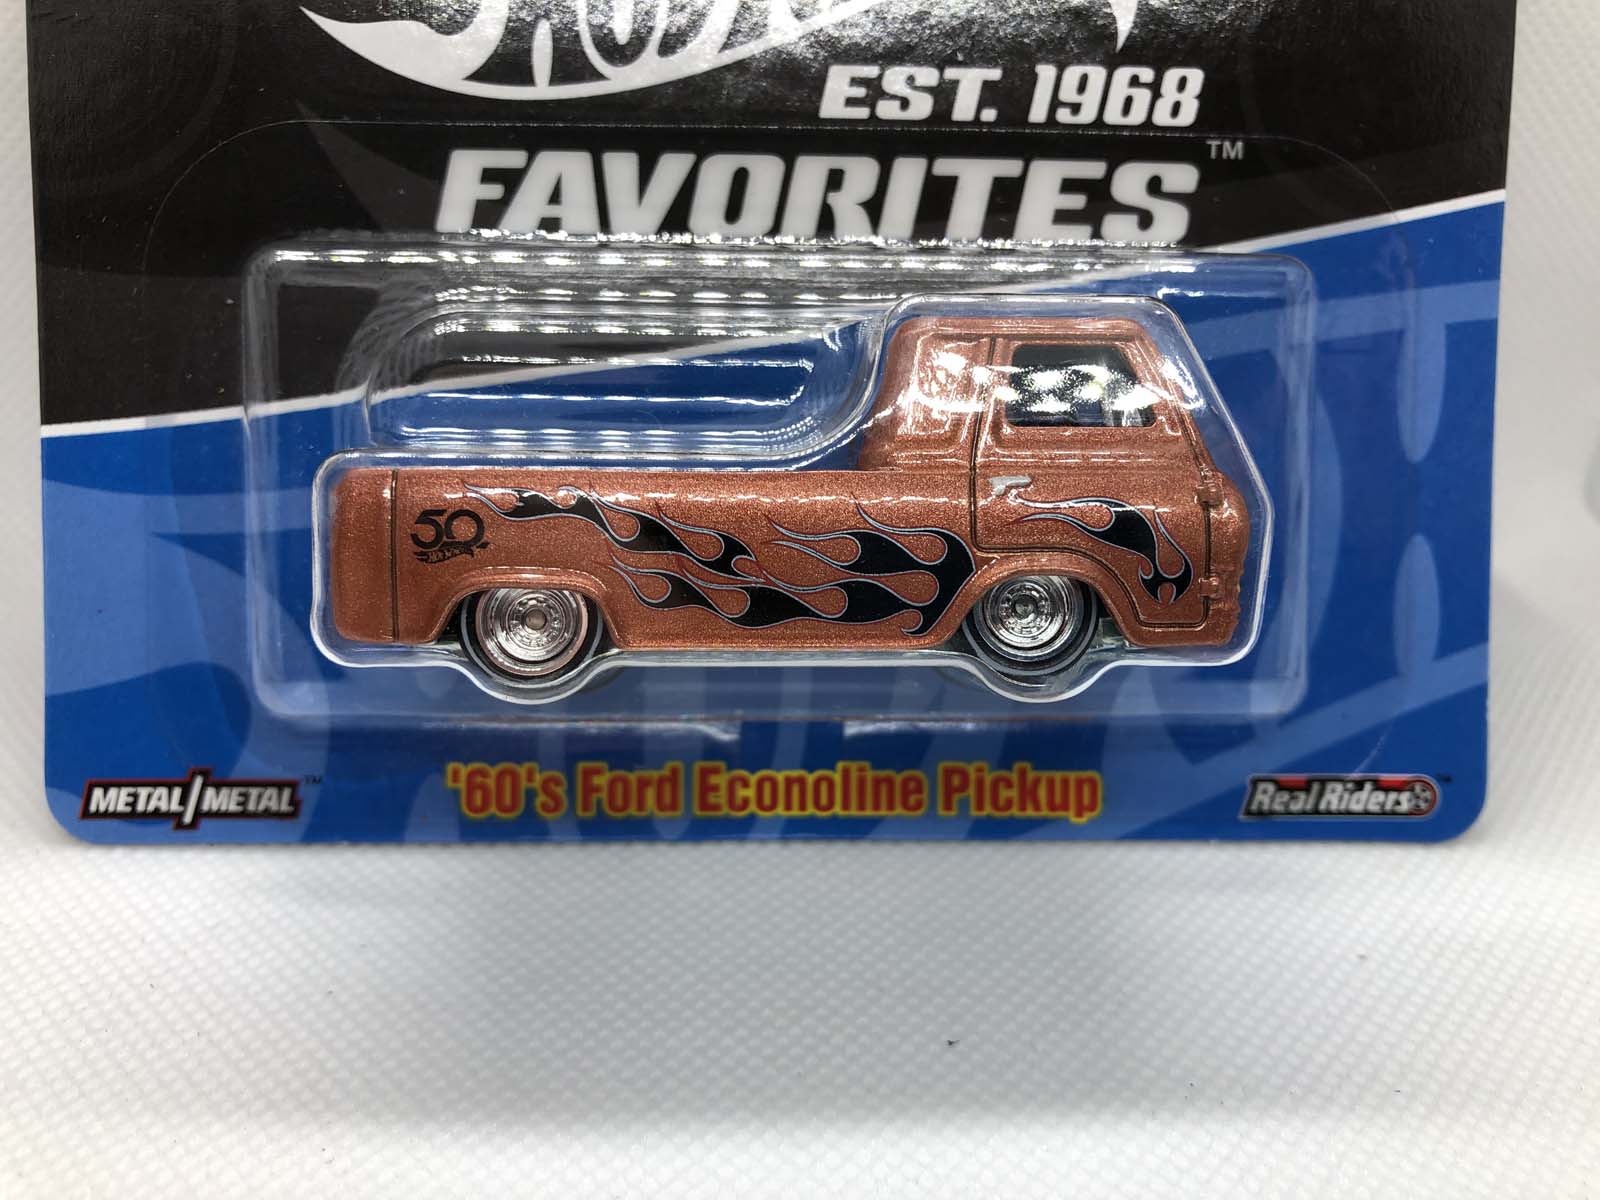 60's Ford Econoline Pickup